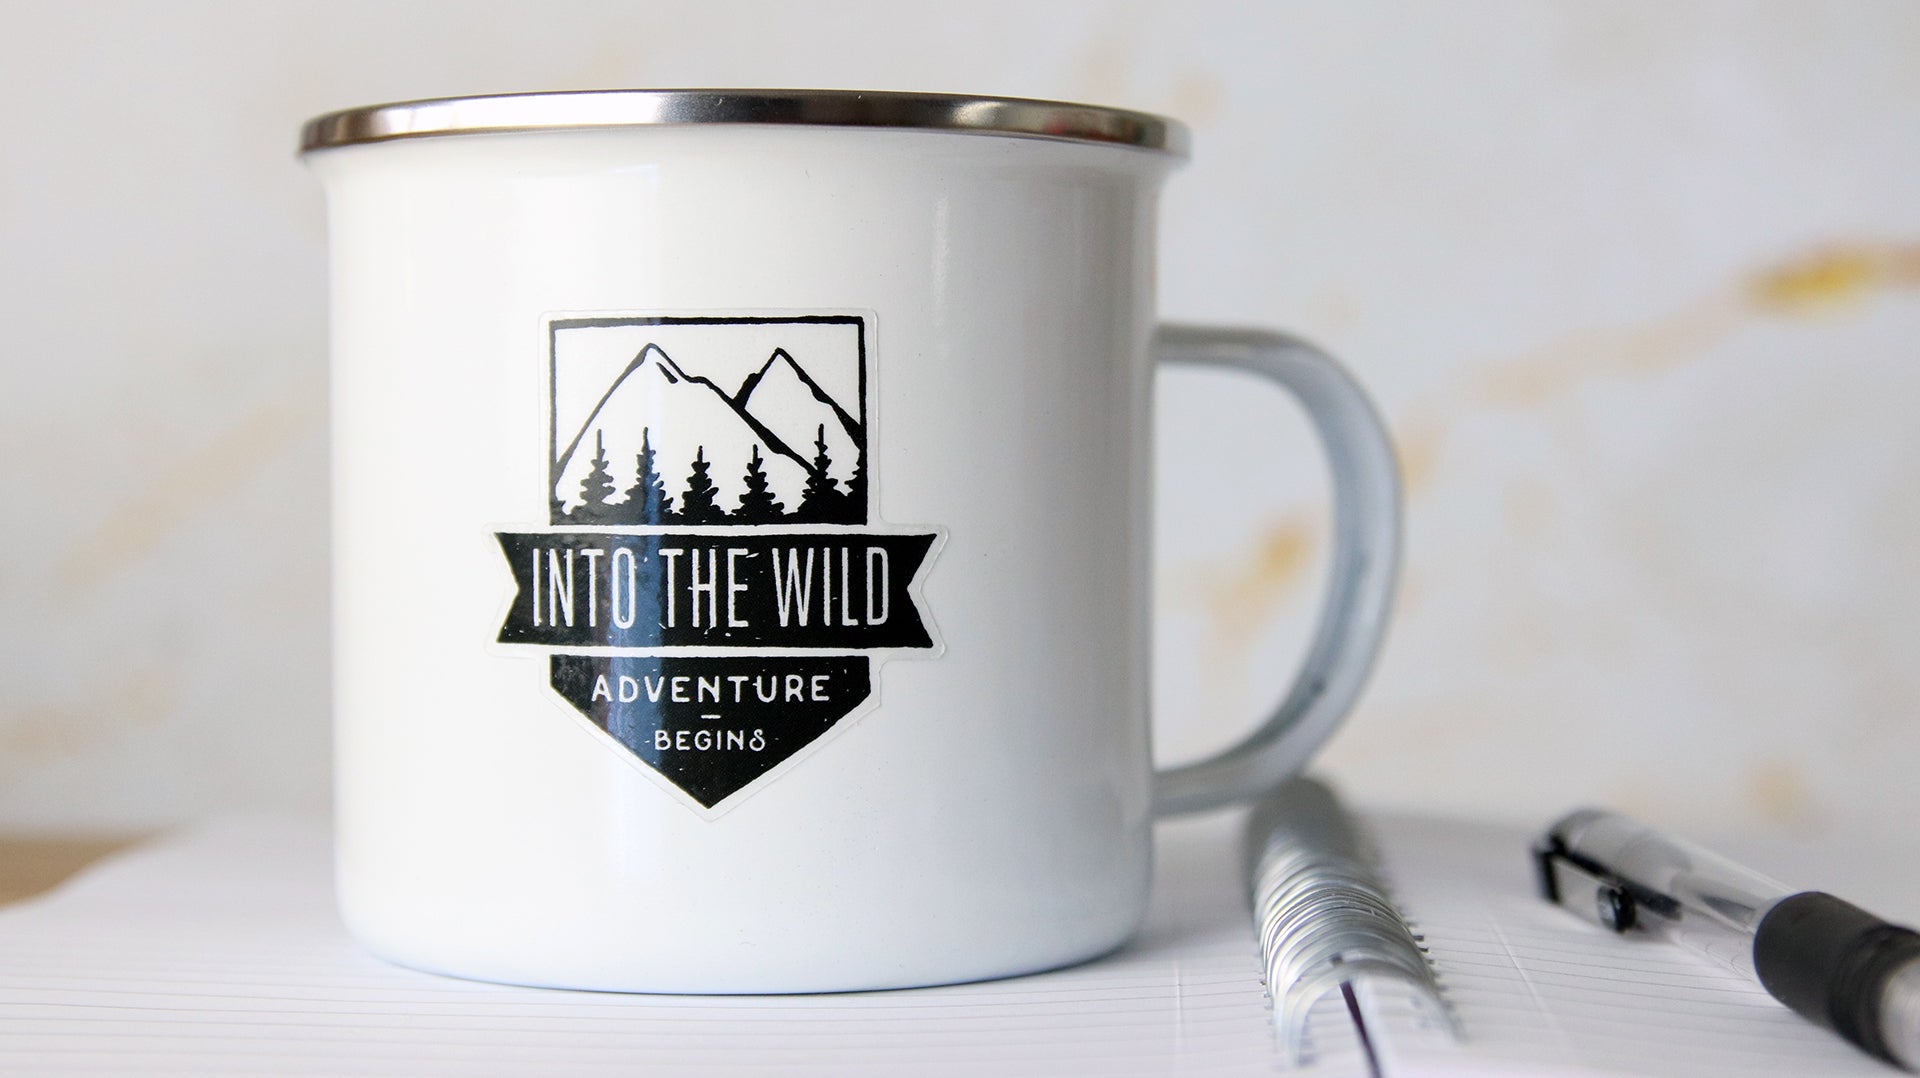 Die cut mug sticker with adventure design printed onto clear vinyl applied to a white mug